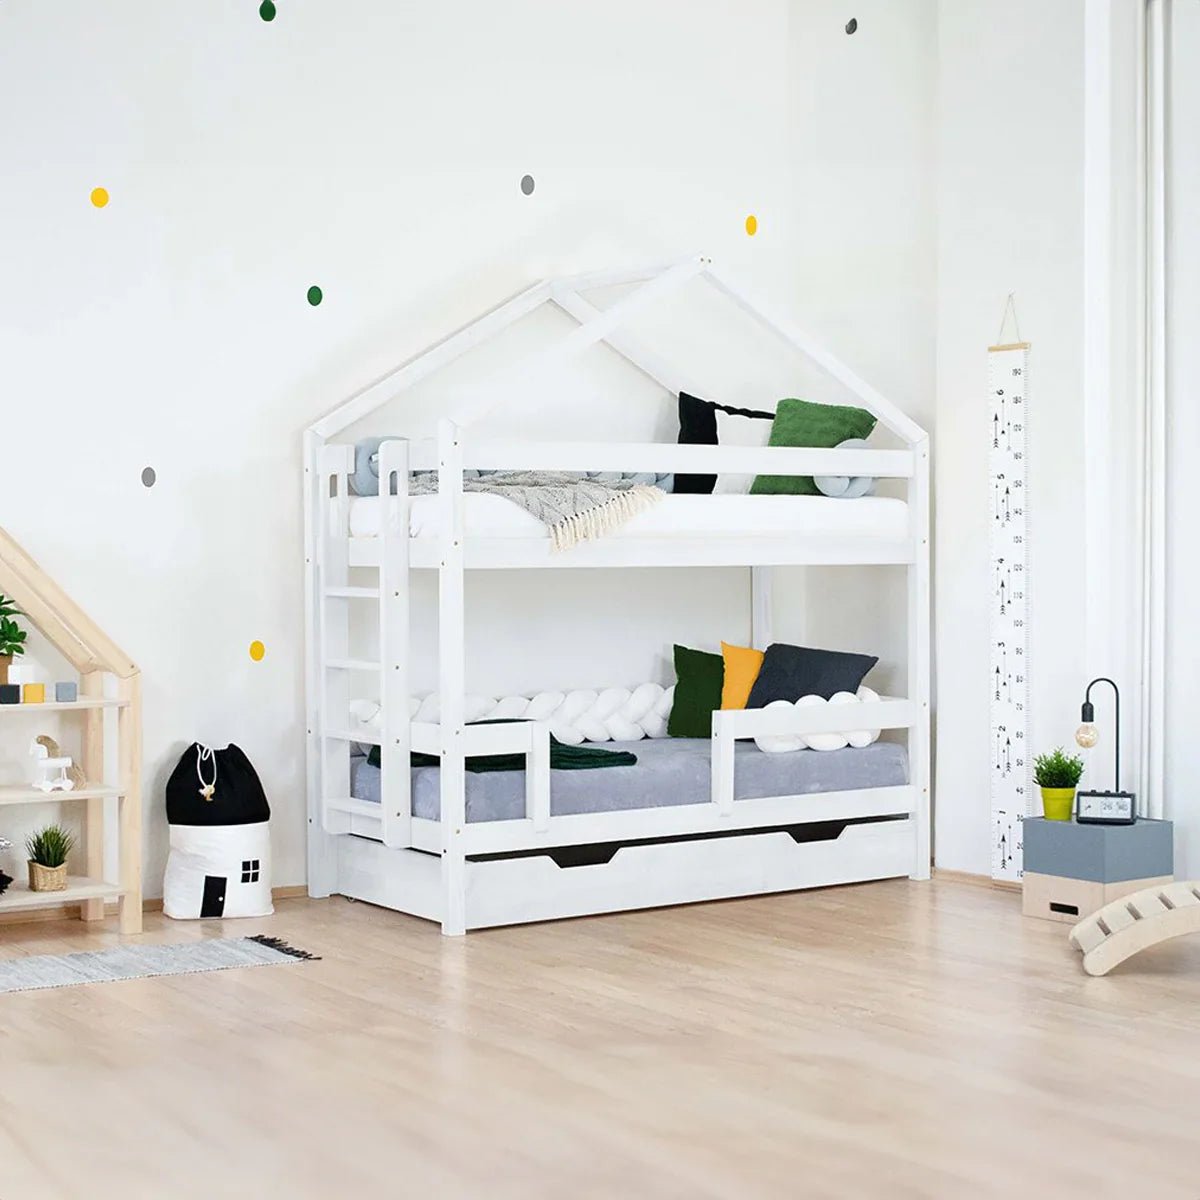 Wooden Children's House Bunk Bed KILI - White